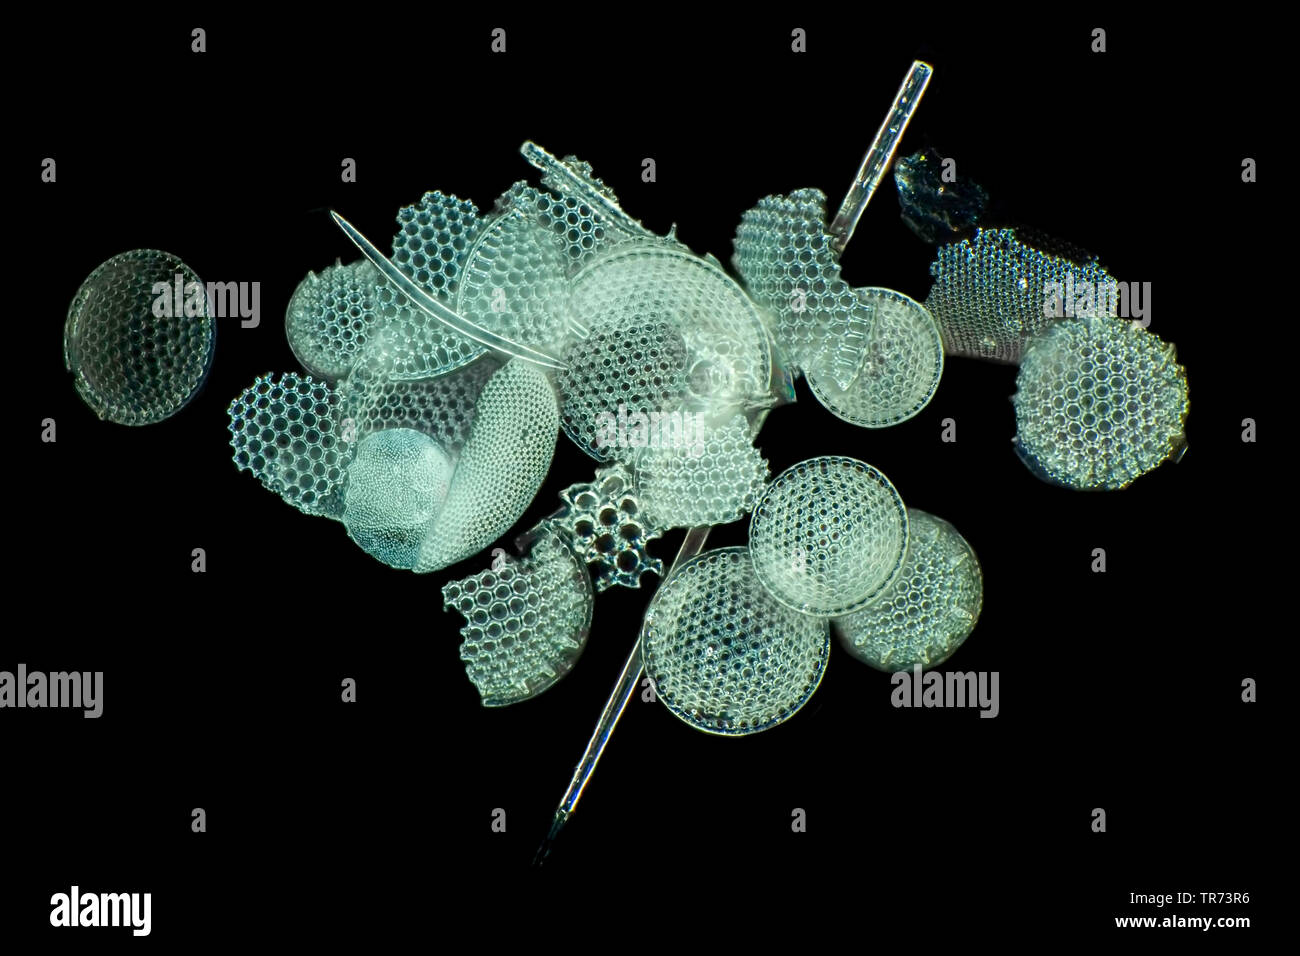 diatom (Diatomeae), fossil diatoms from Oamaru in darkfield, x 40 Stock Photo